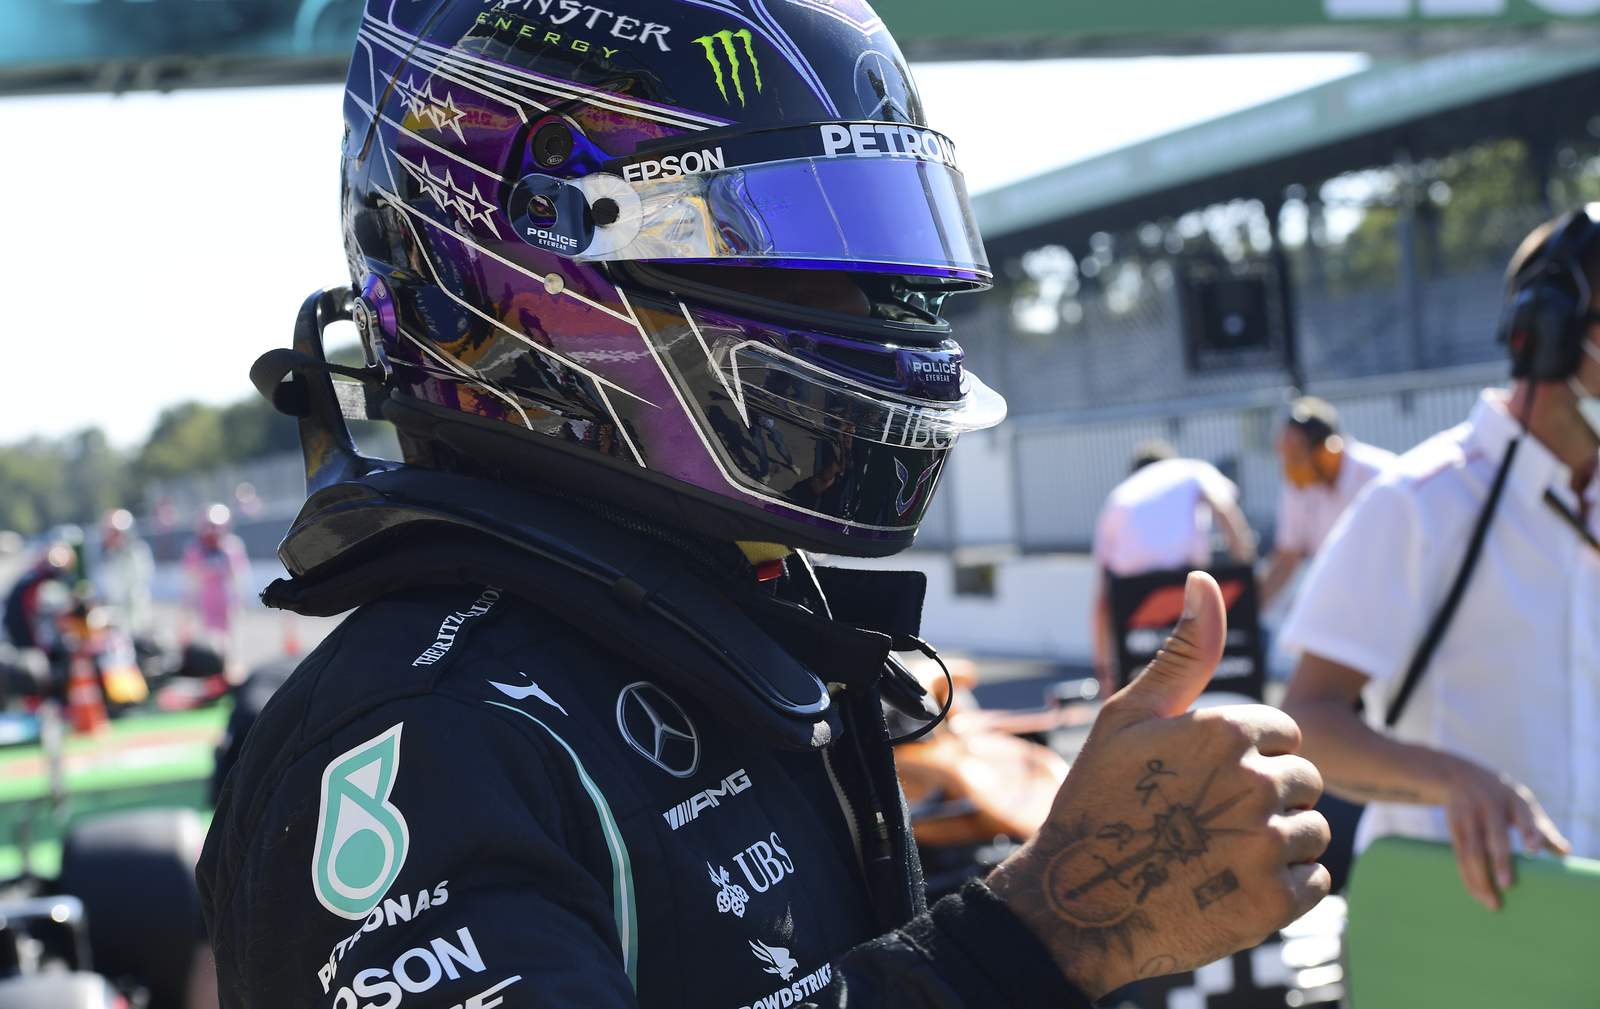 Hamilton sets fastest lap in F1 history to take Monza pole